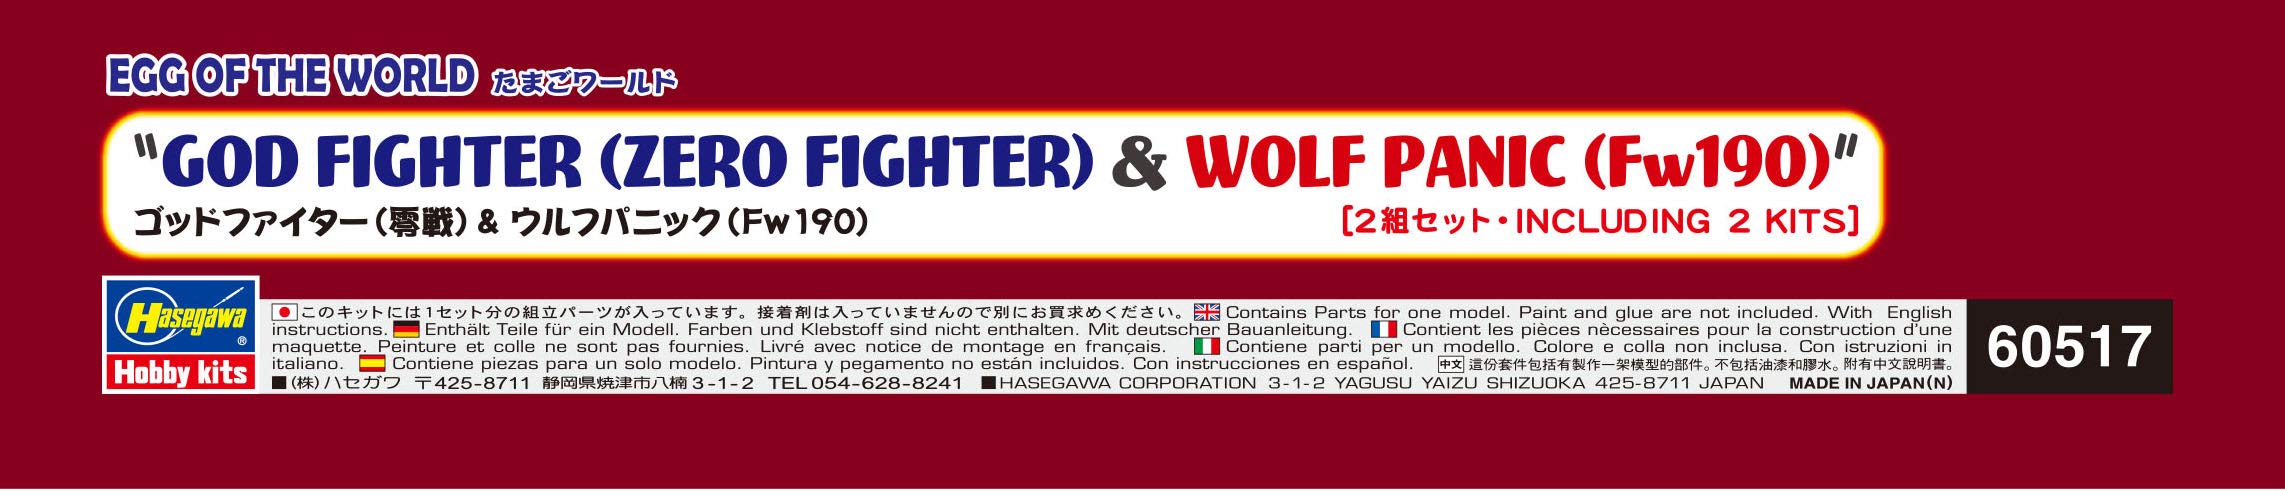 HASEGAWA 60517 Egg World God Fighter Zero Fighter &amp; Wolf Panic Fw190